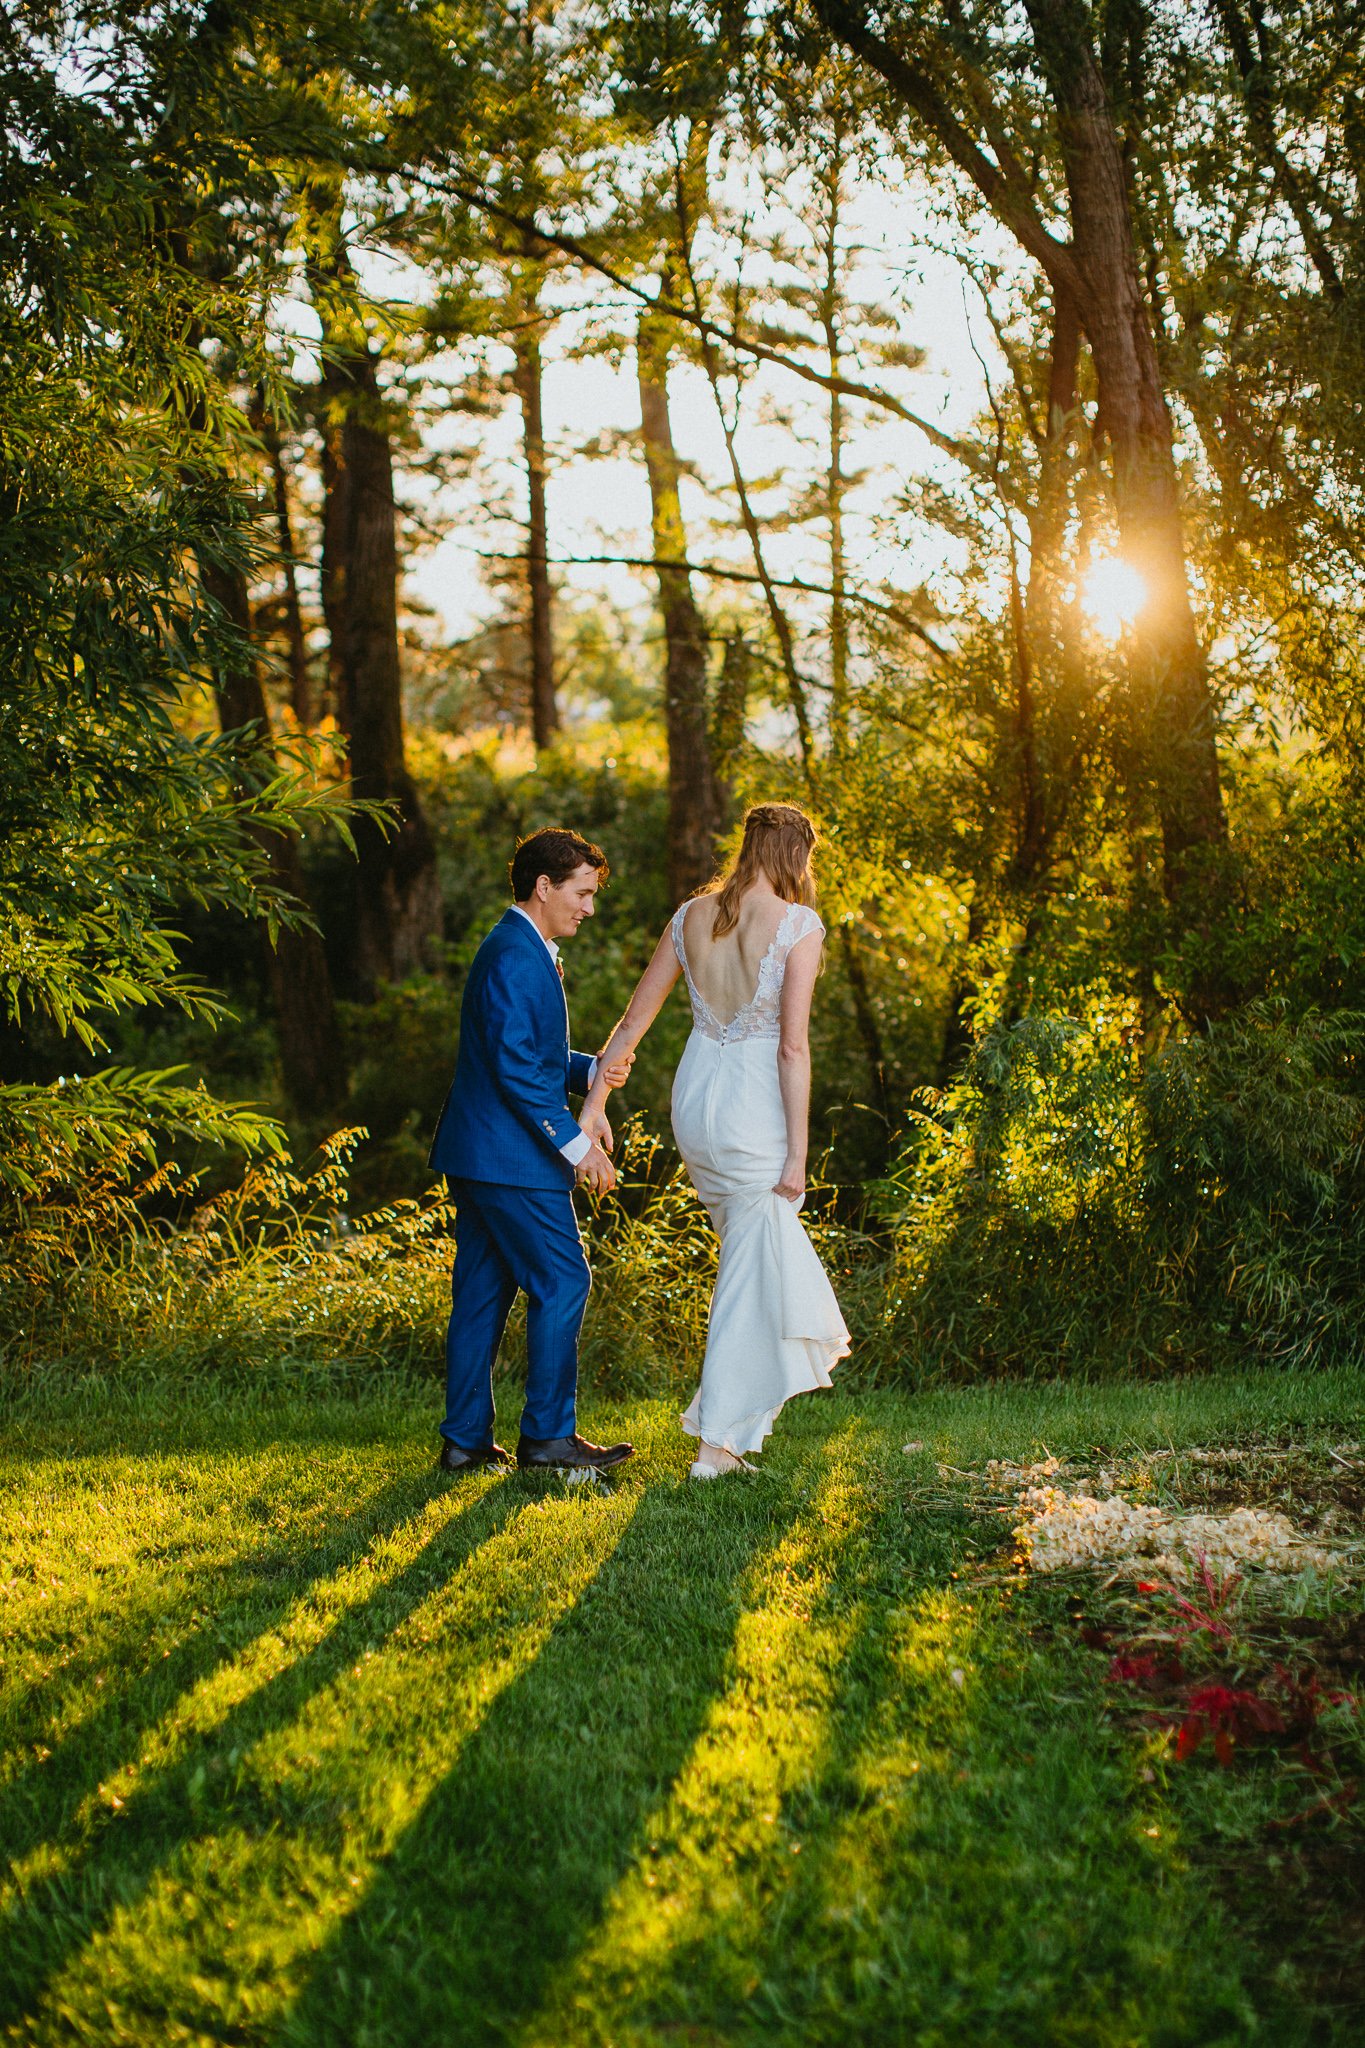 boulder flower farm wedding photography